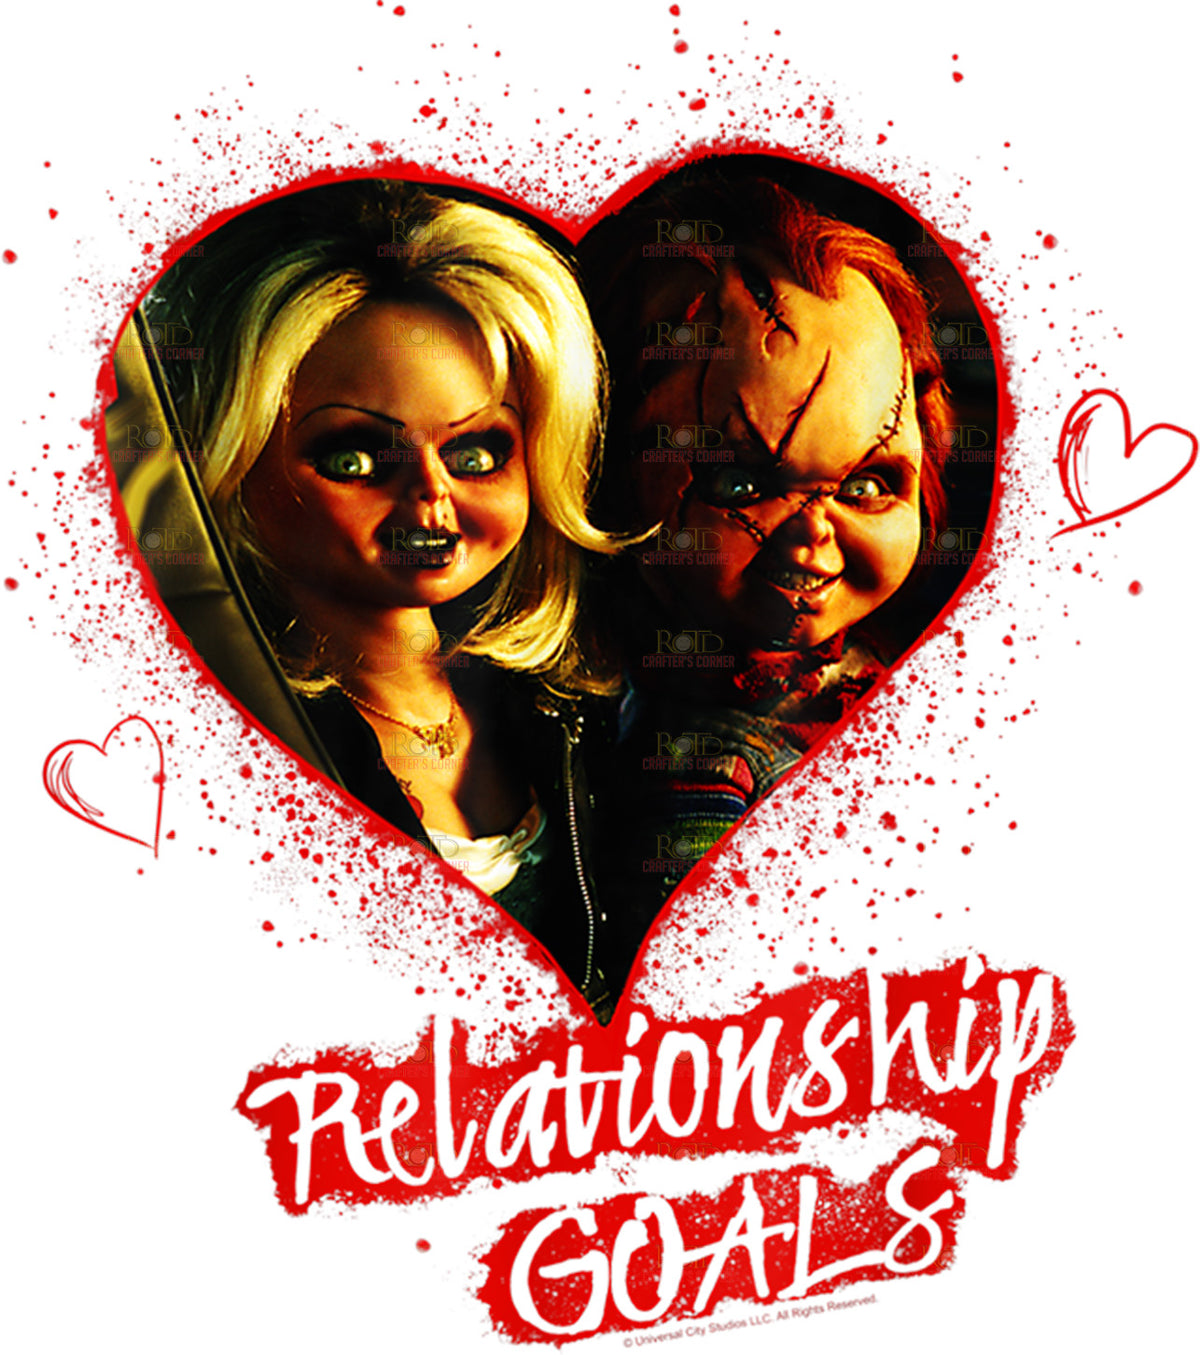 DTF Screen Print Image - Relationship Goals